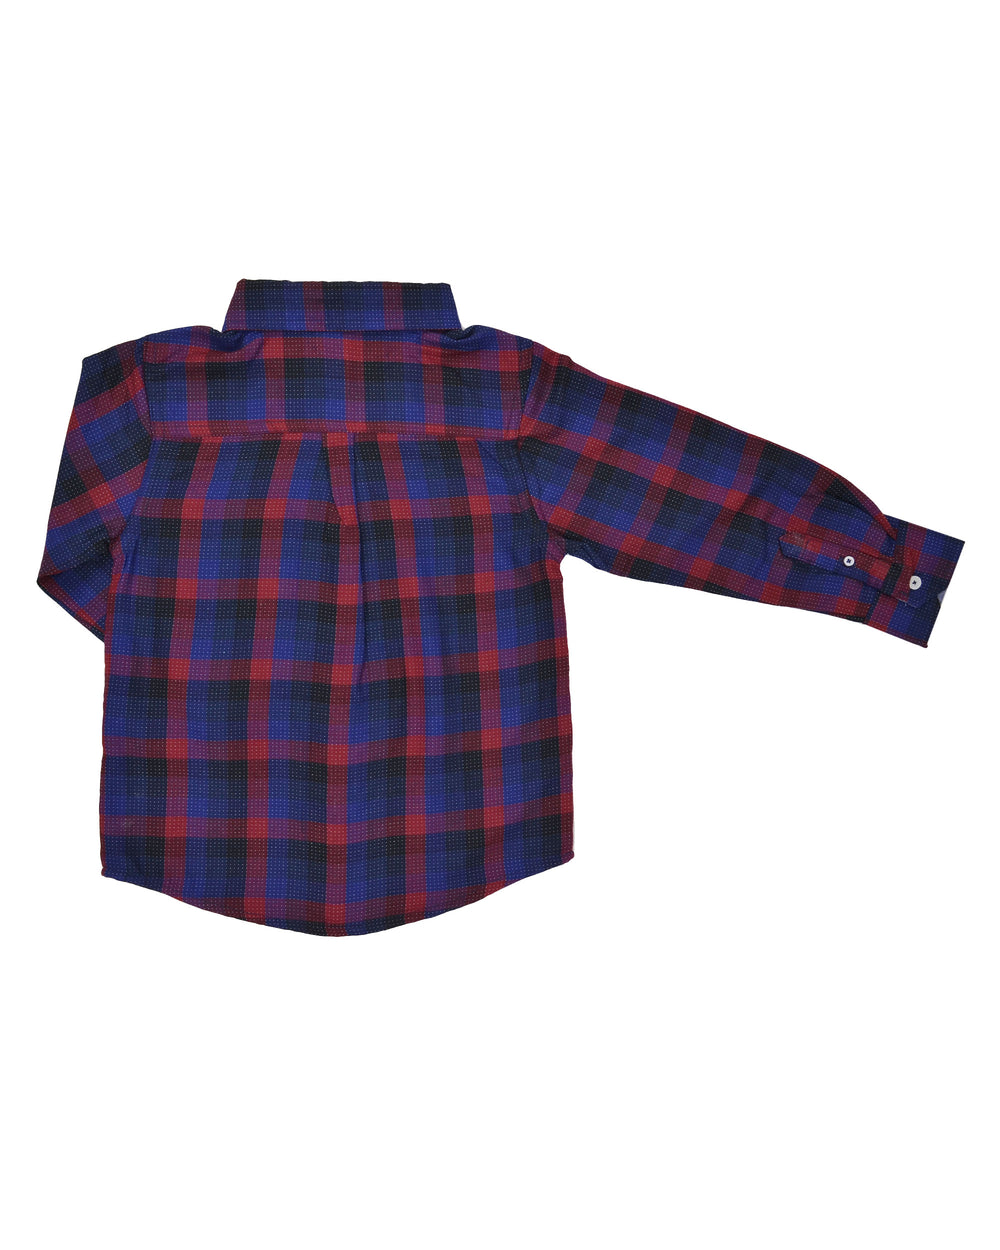 Boys' Black/Blue/Red Plaid Button-Down Shirt (Sizes 8-18)